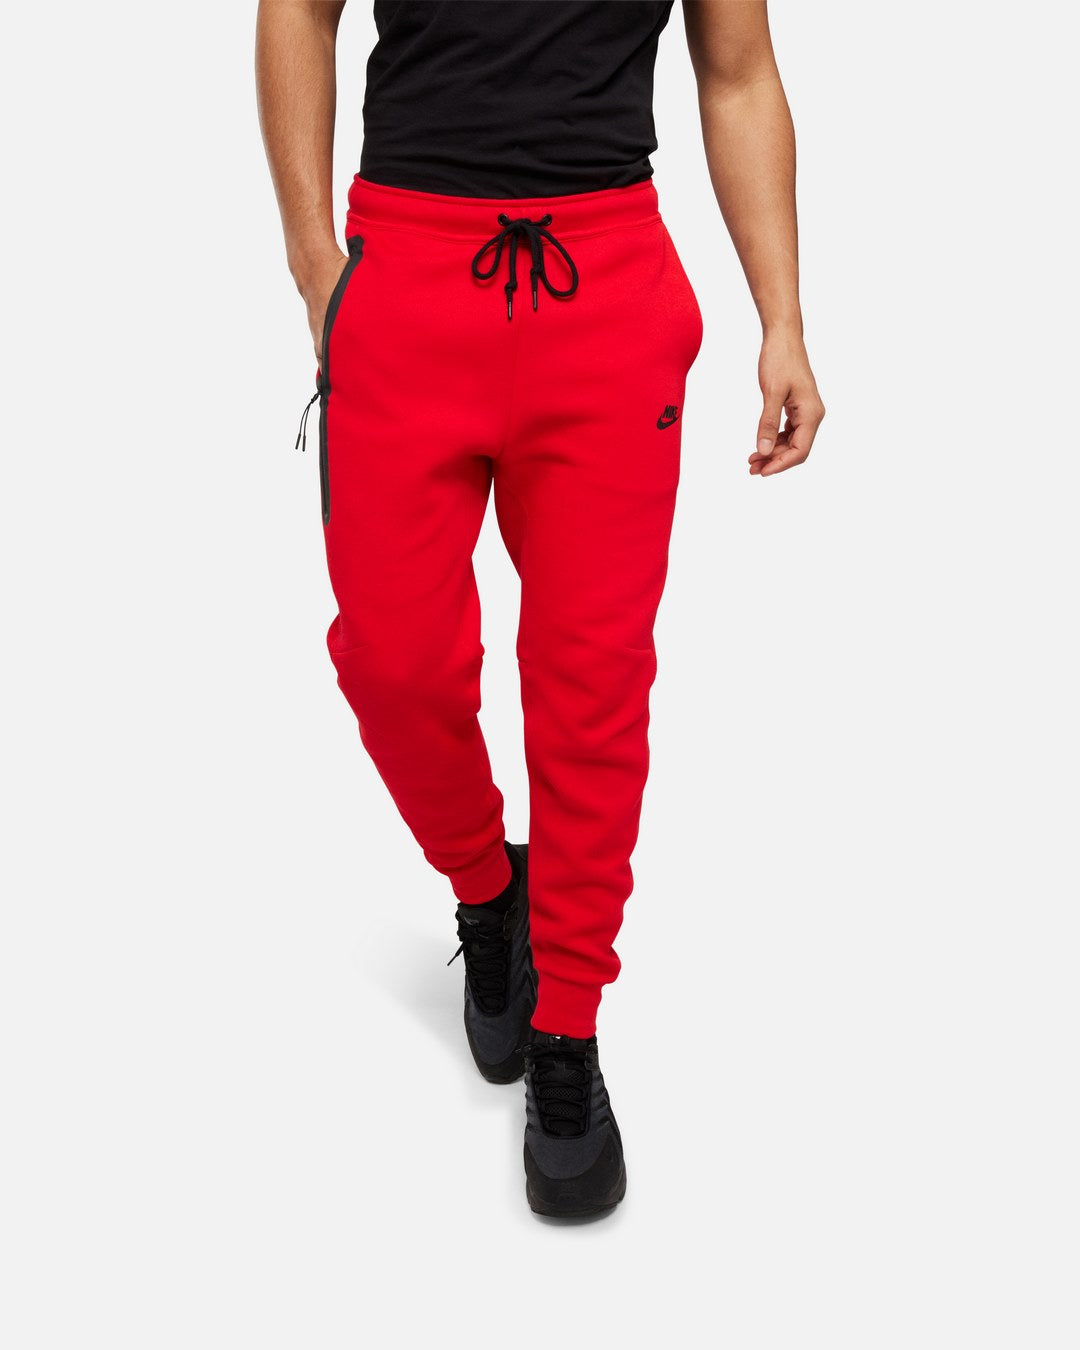 Pantalon Nike Tech Fleece - Rouge/Noir